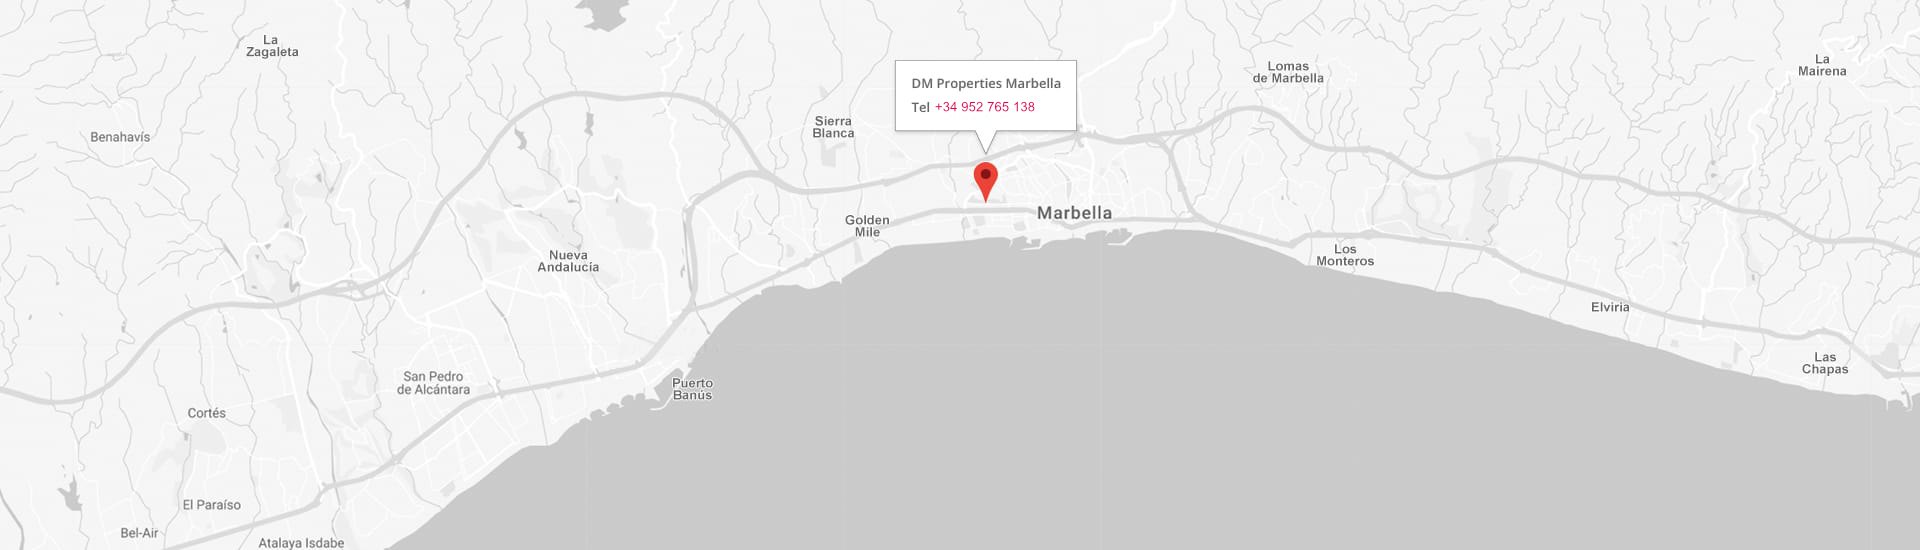 DM Properties Marbella Office